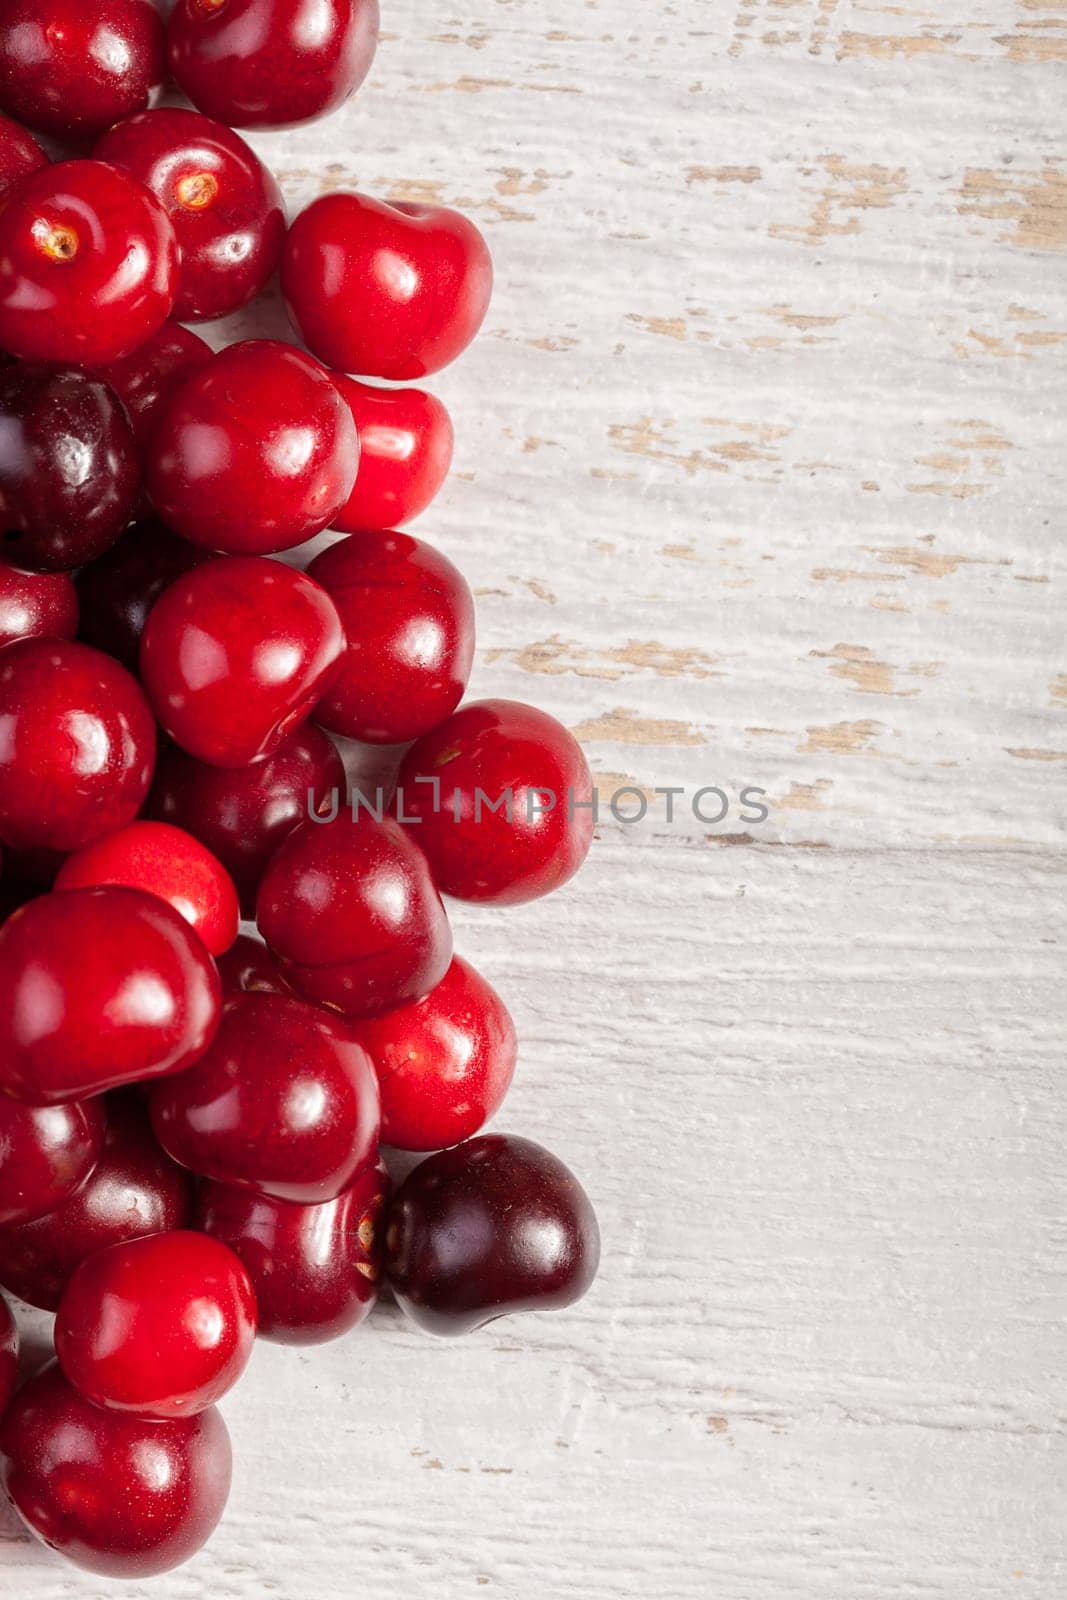 Fresh cherries on wooden table by DCStudio